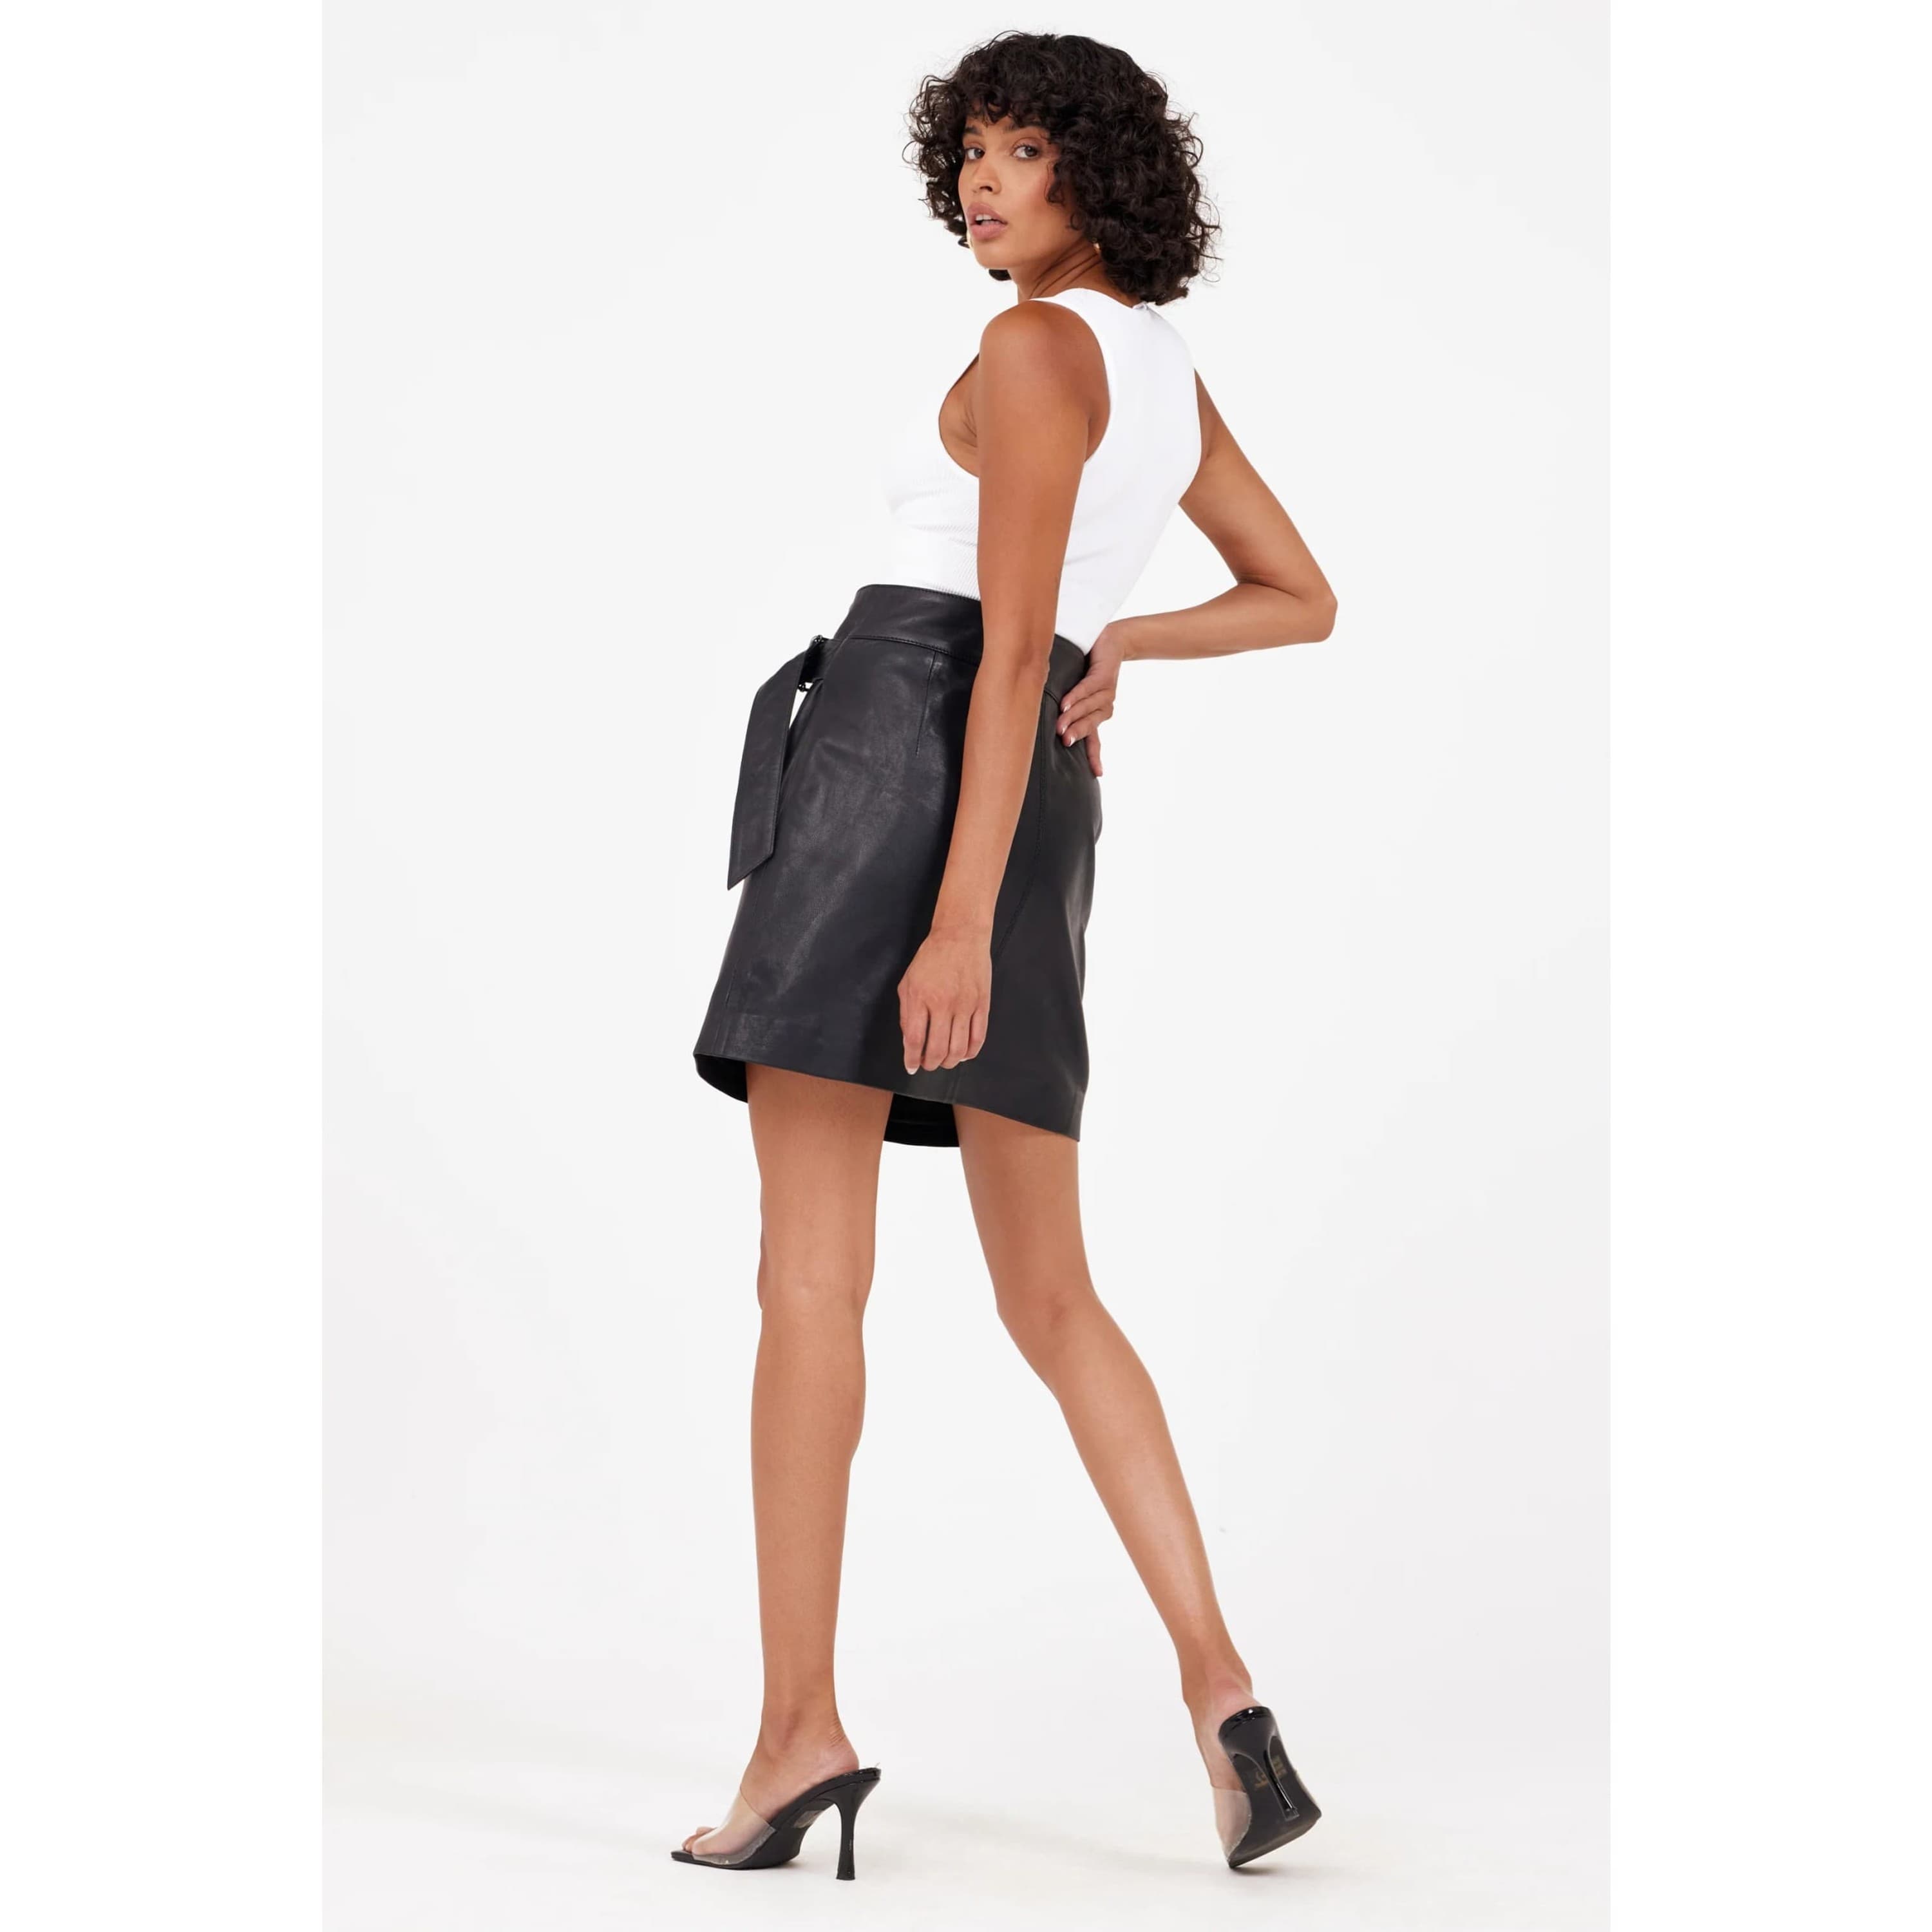 Mauritius Kimba Leather Skirt in Black 